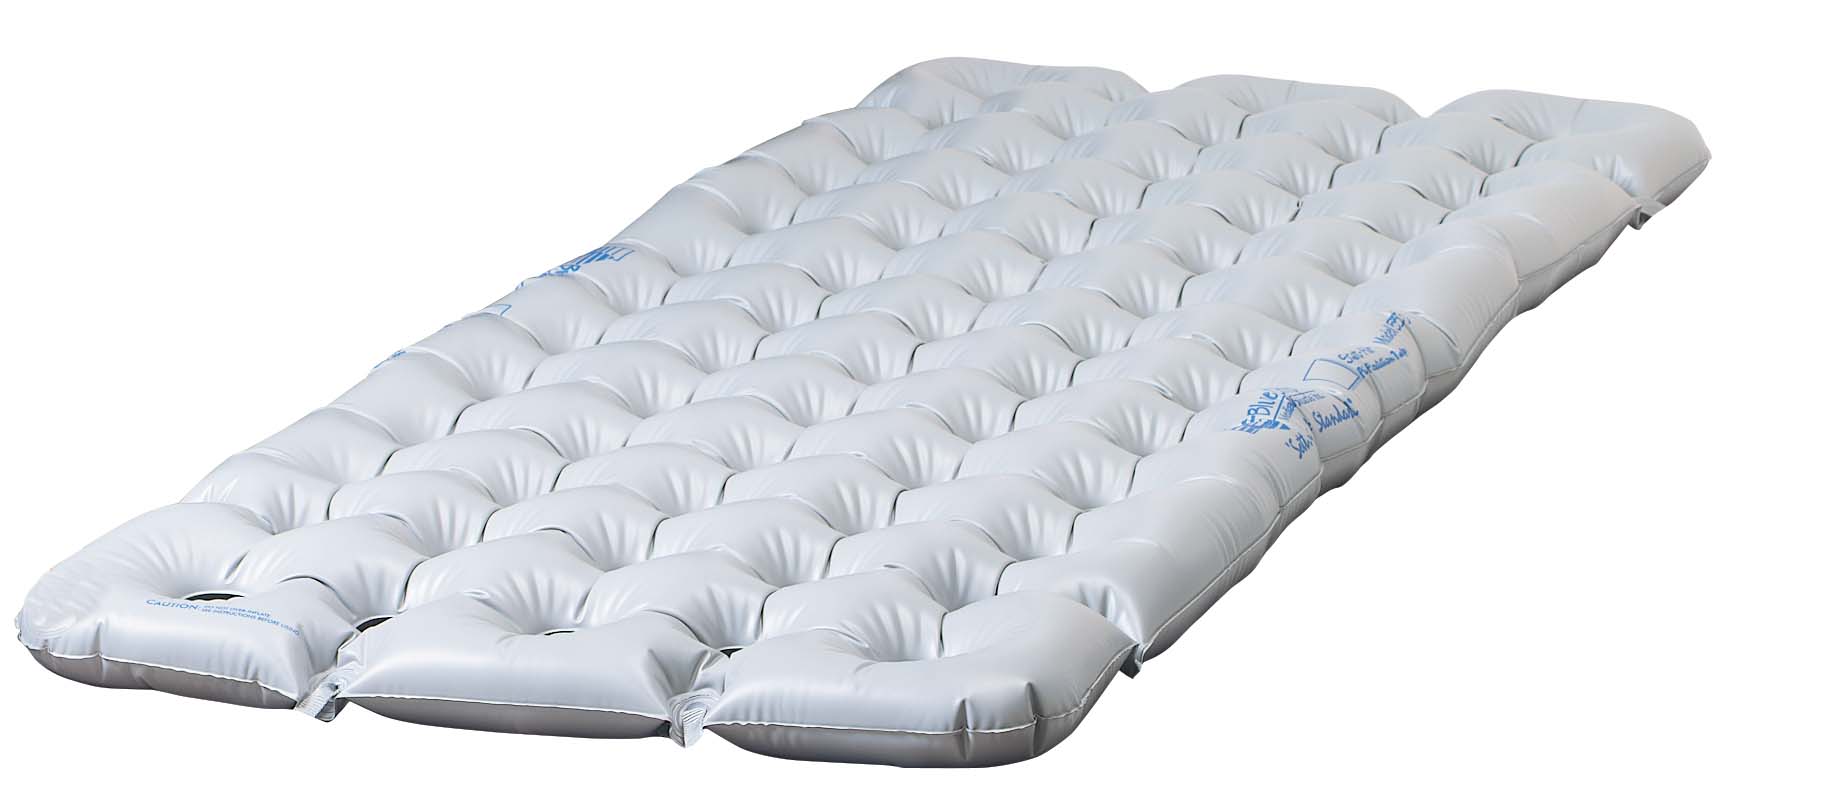 air mattress overlay in yukon